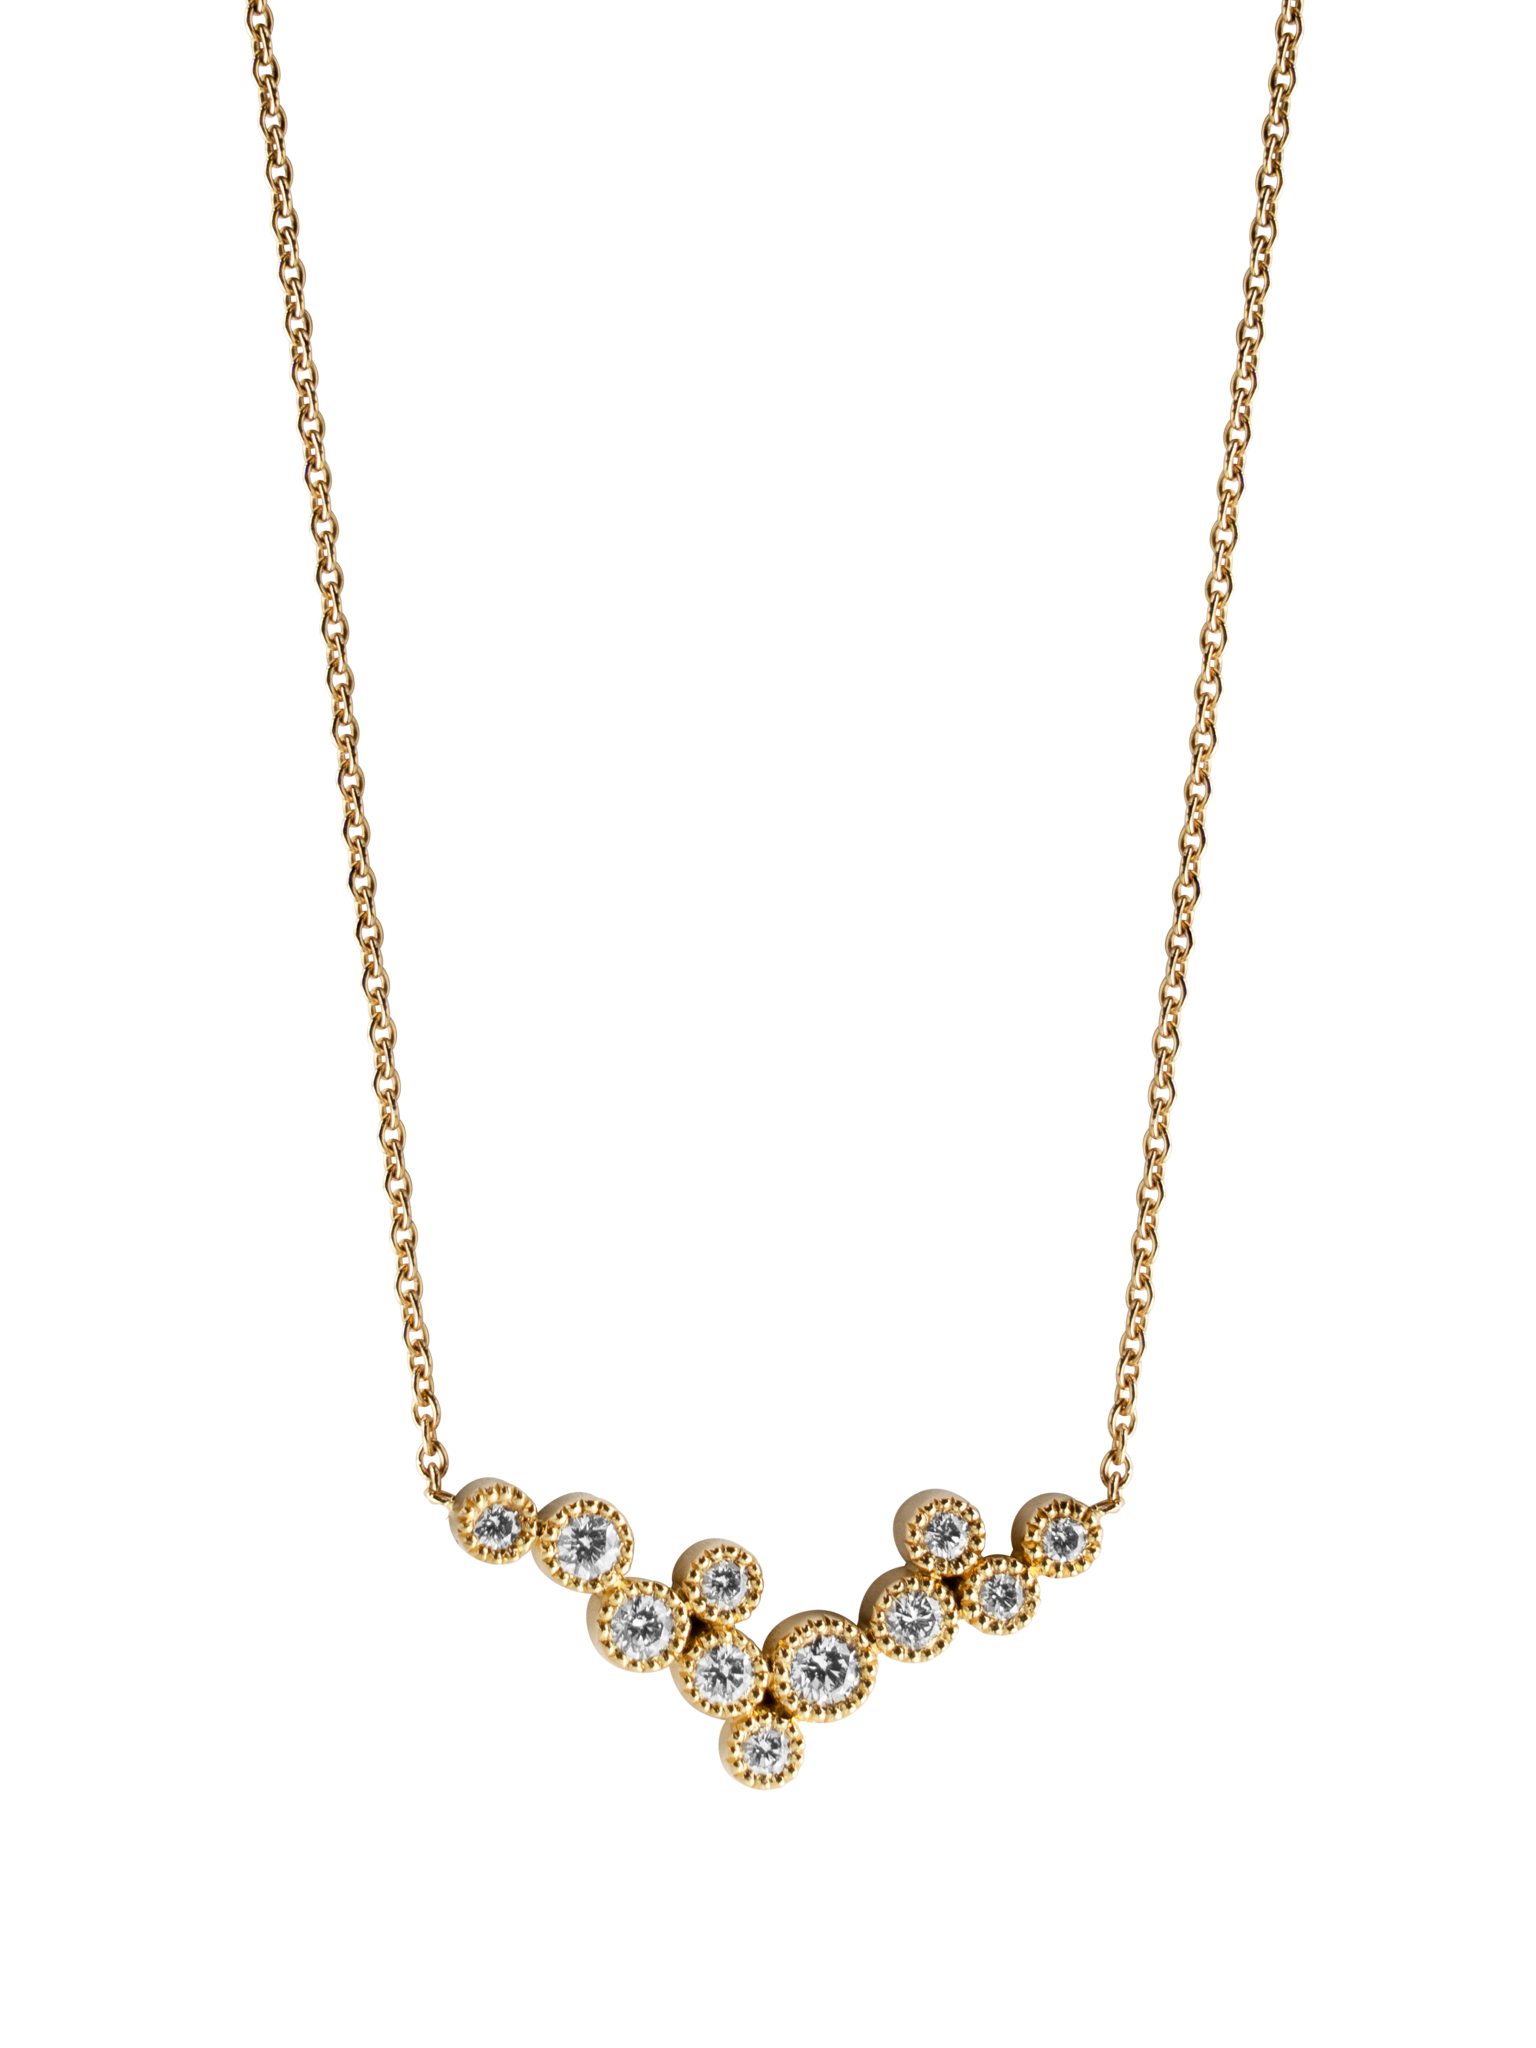 Alma necklace